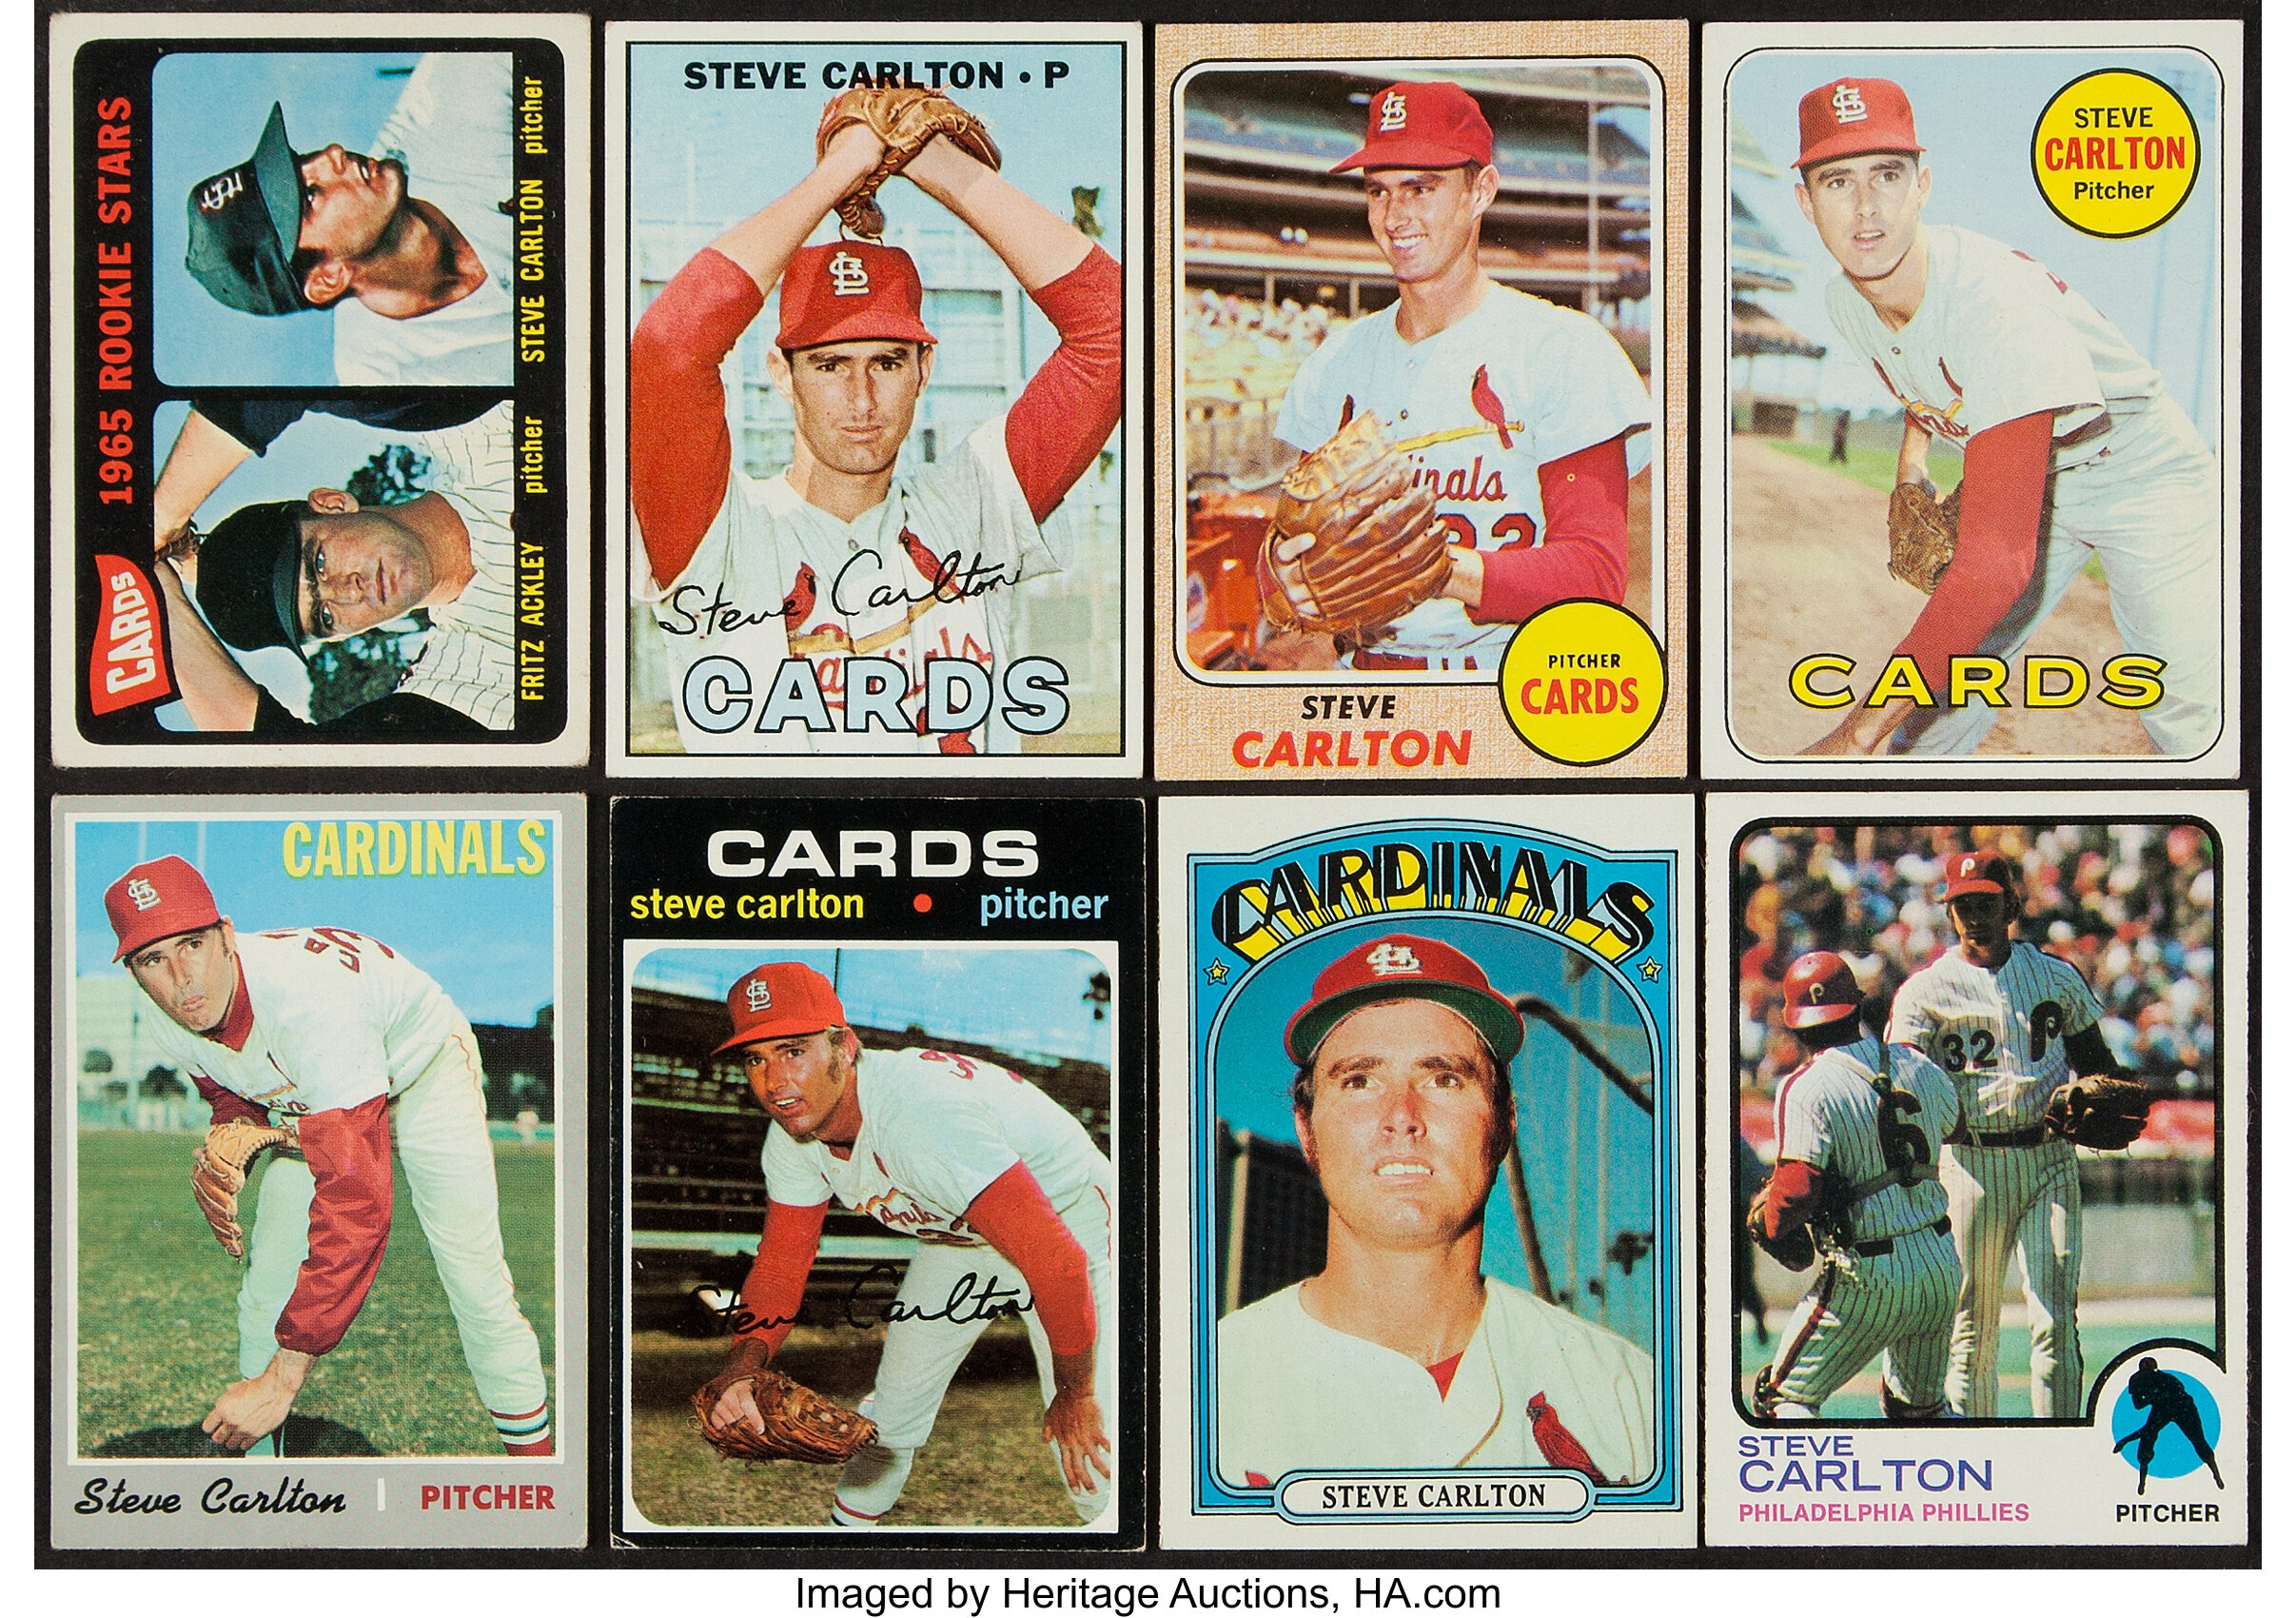 Steve Carlton Signed 1965 Topps Rookie Stars Cardinals Baseball Card #477 PSA